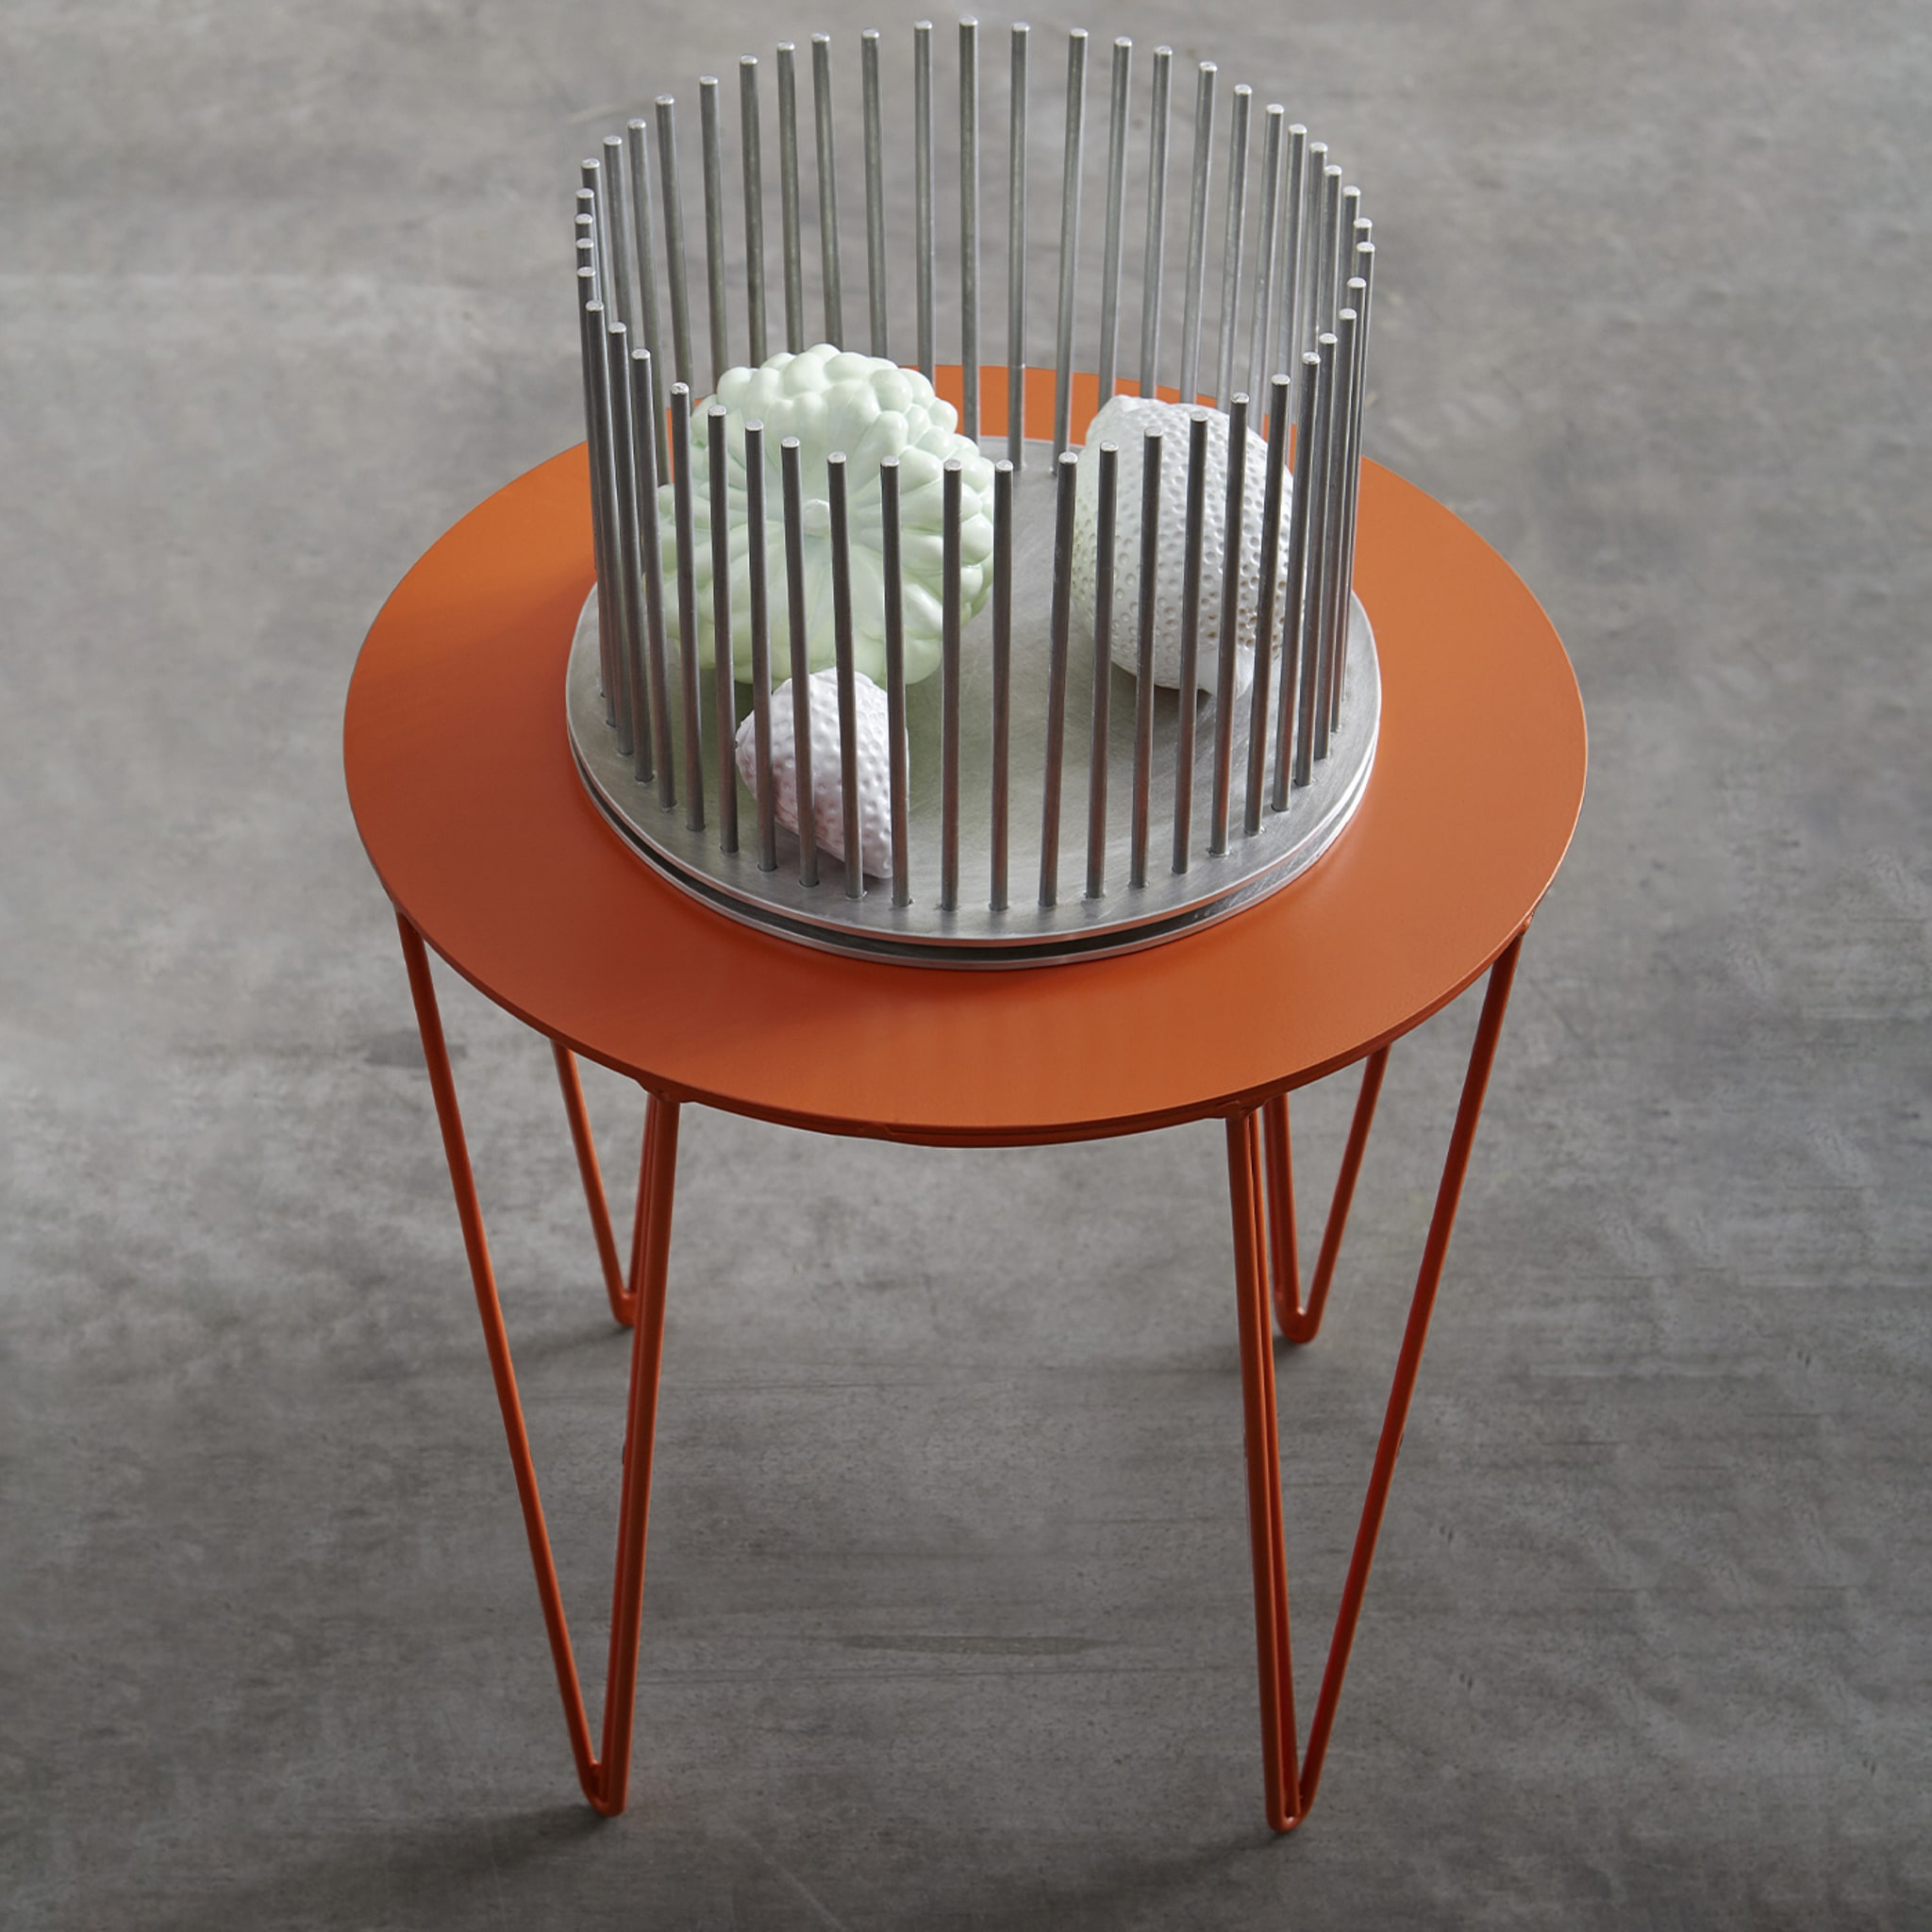 Chele Orange Coffee Table by Antonino Sciortino - Alternative view 1